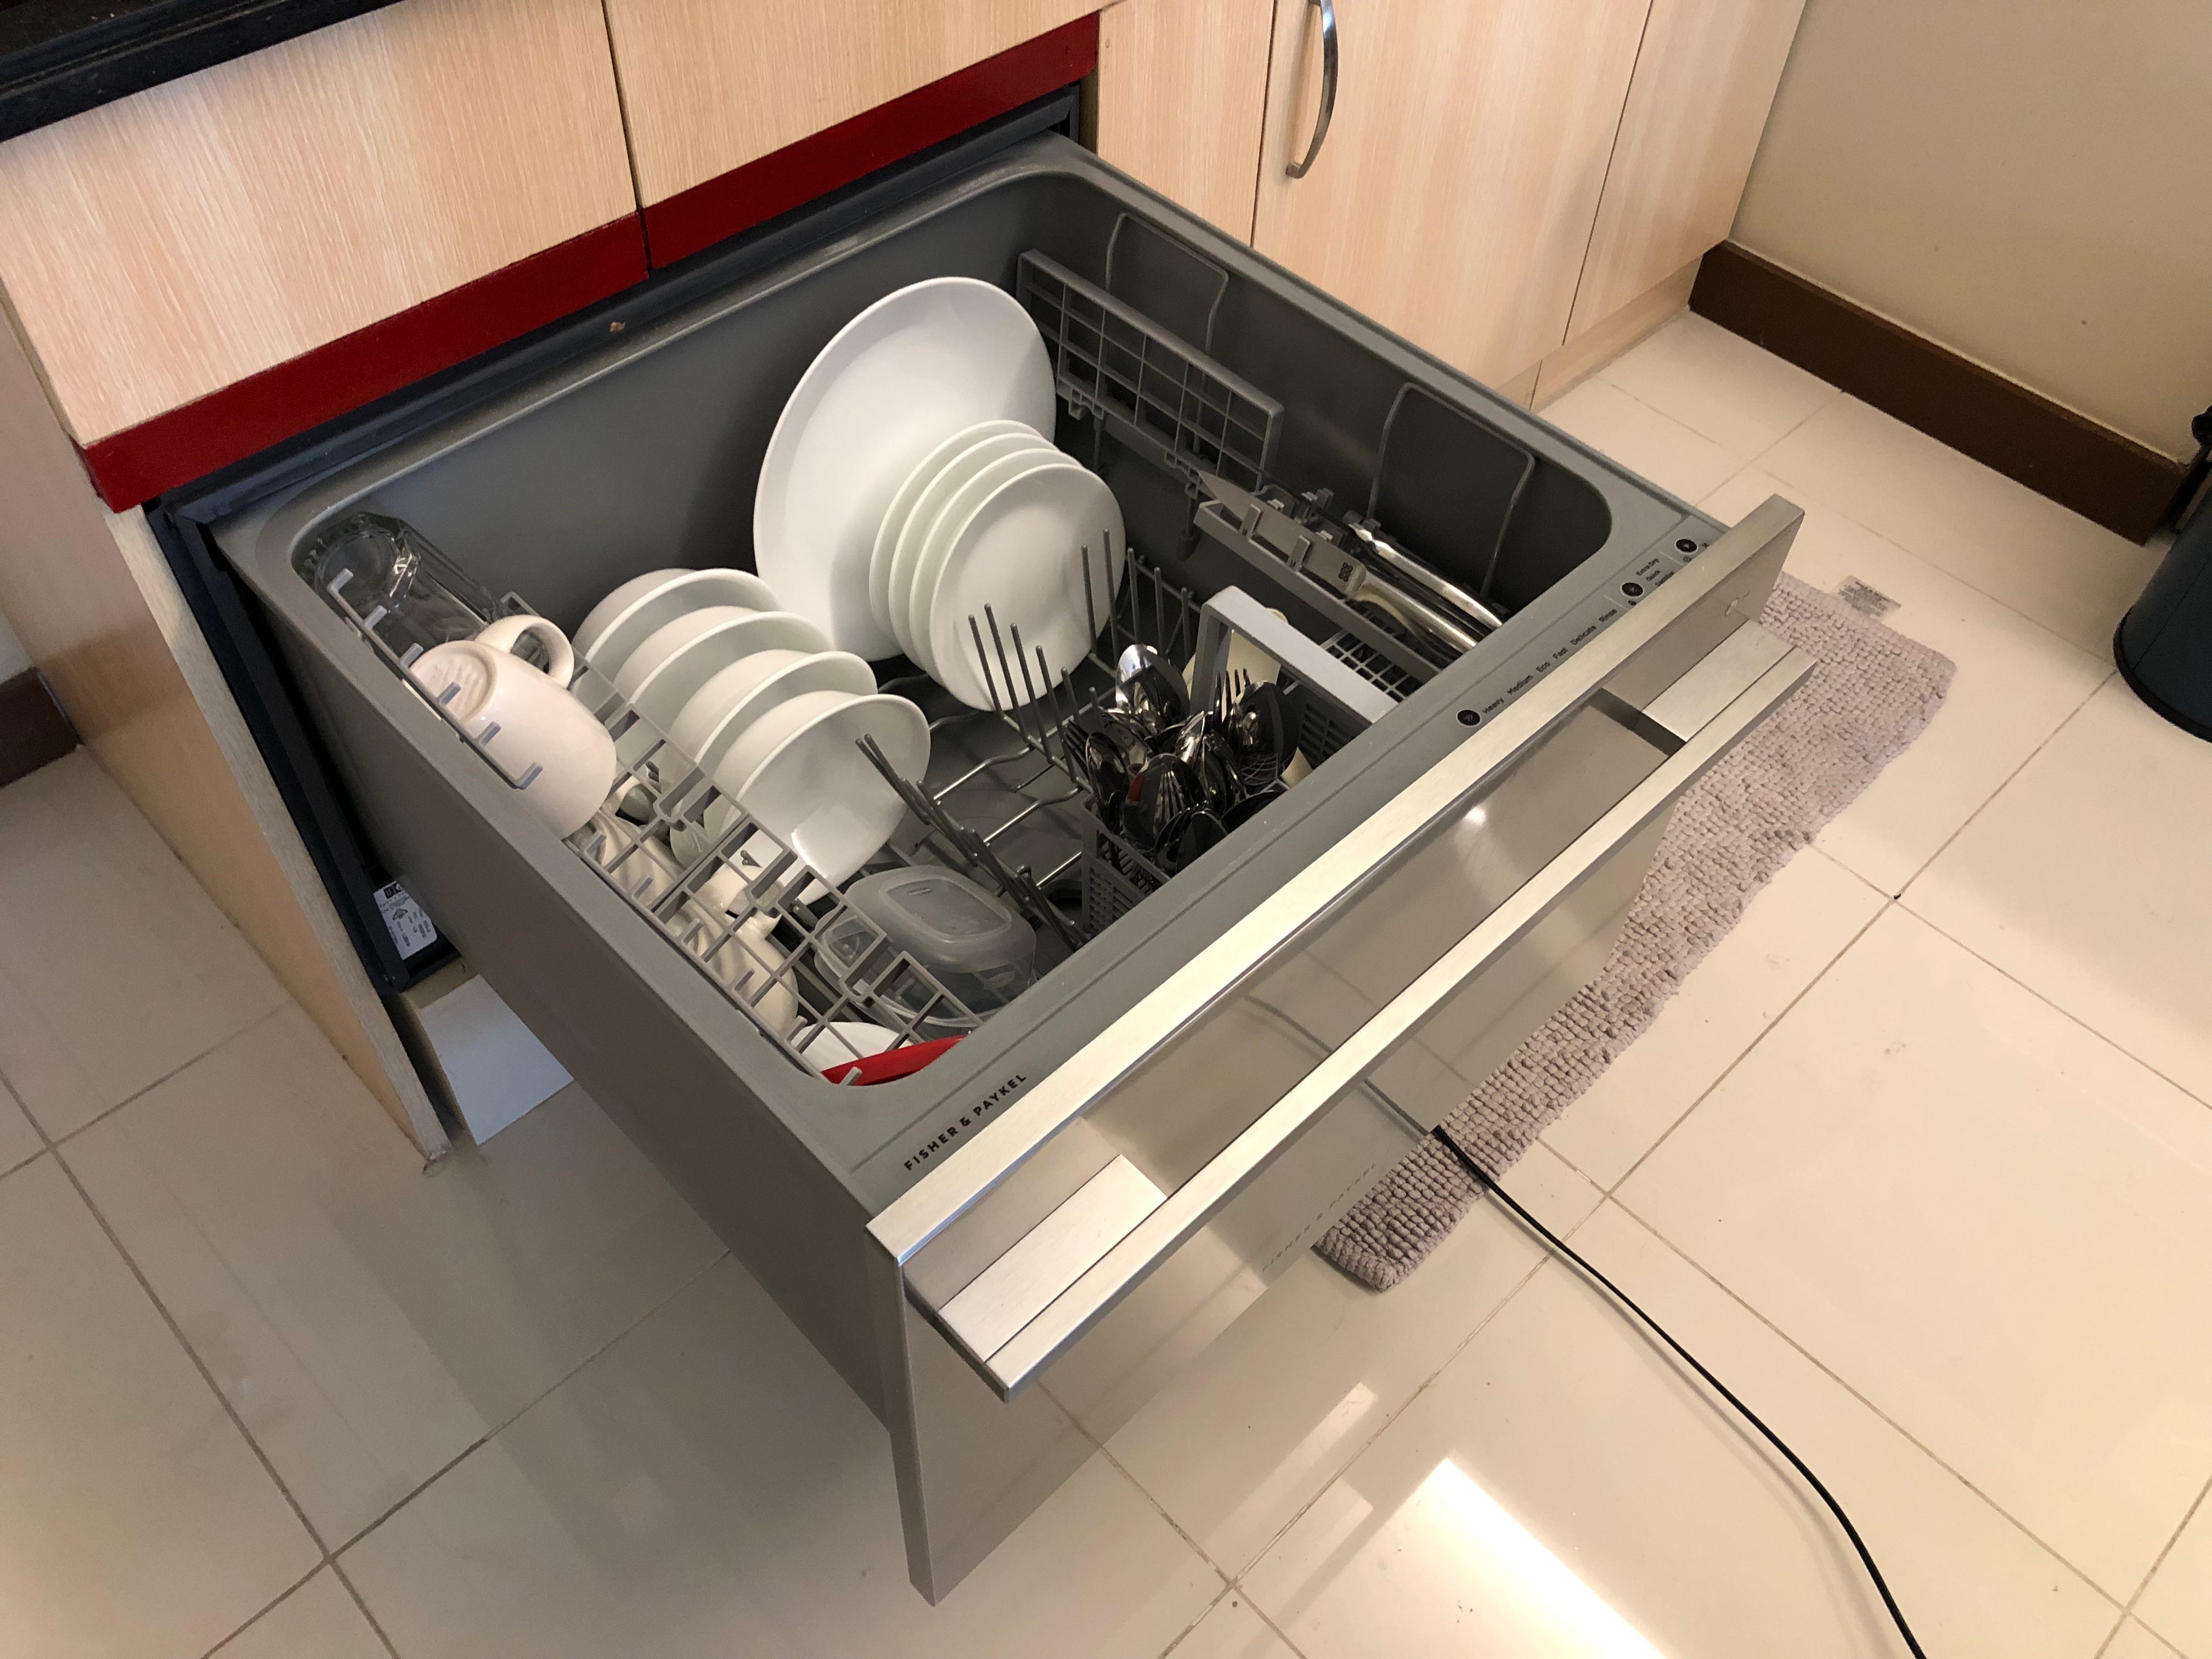 18 dishwashers for sale